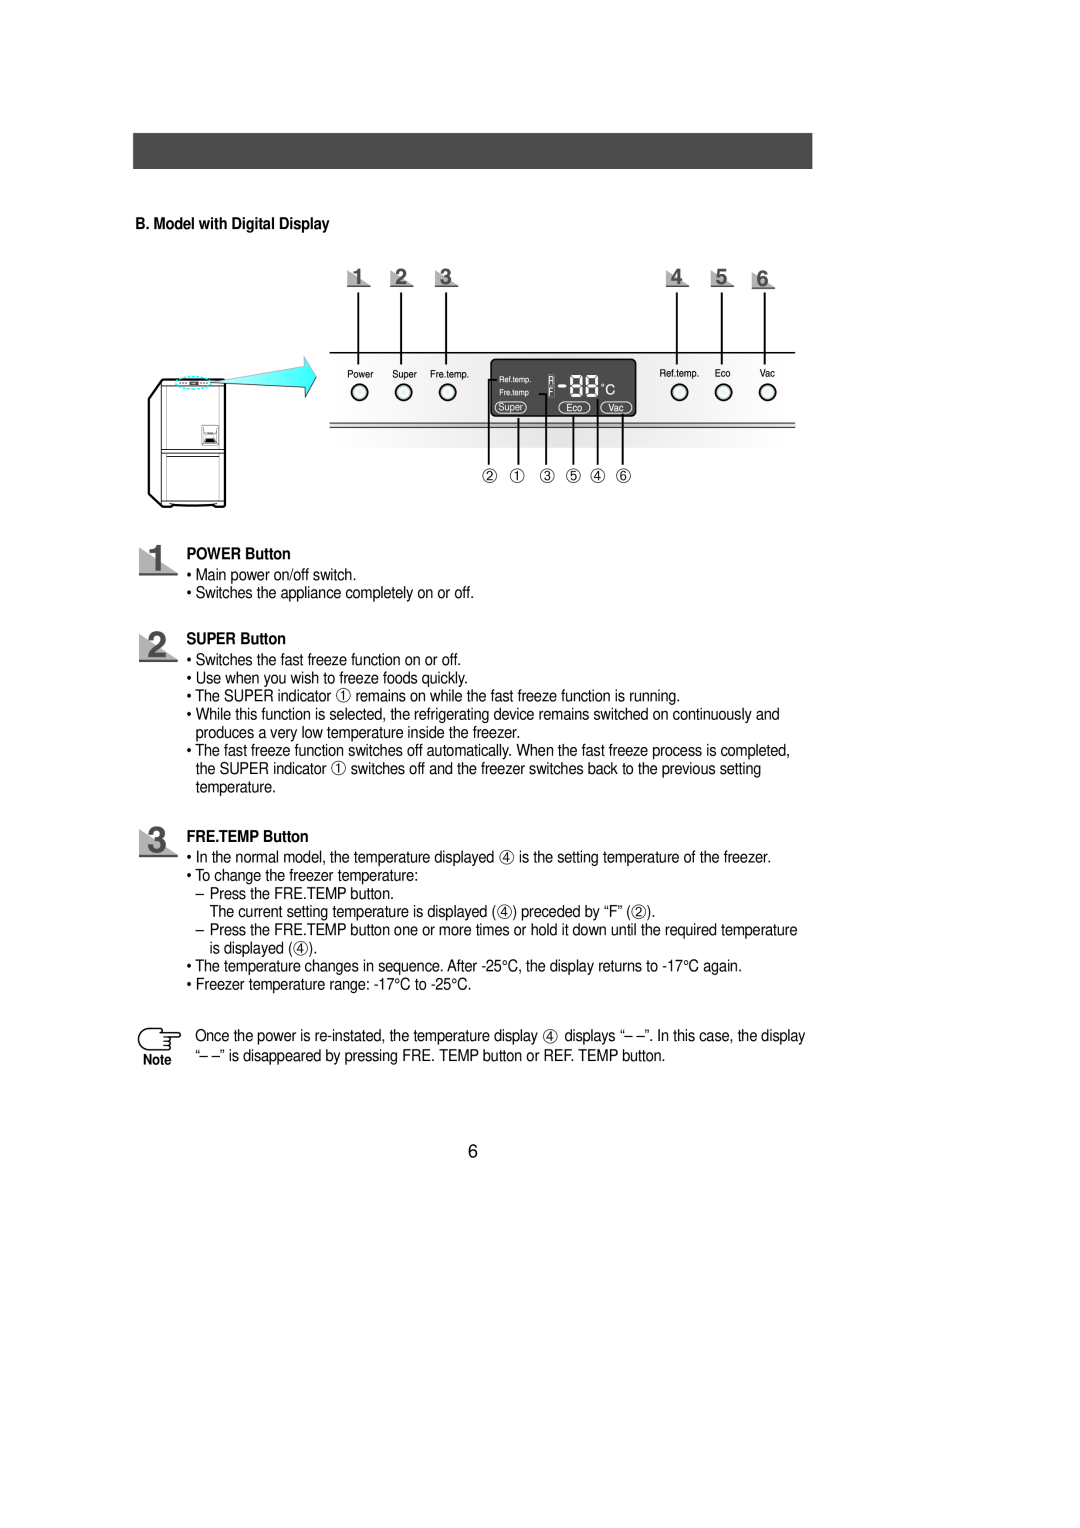 Samsung DA68-01281A manual ➁ ➀ ➂ ➄ ➃ ➅, B. Model with Digital Display, POWER Button, SUPER Button, FRE.TEMP Button 